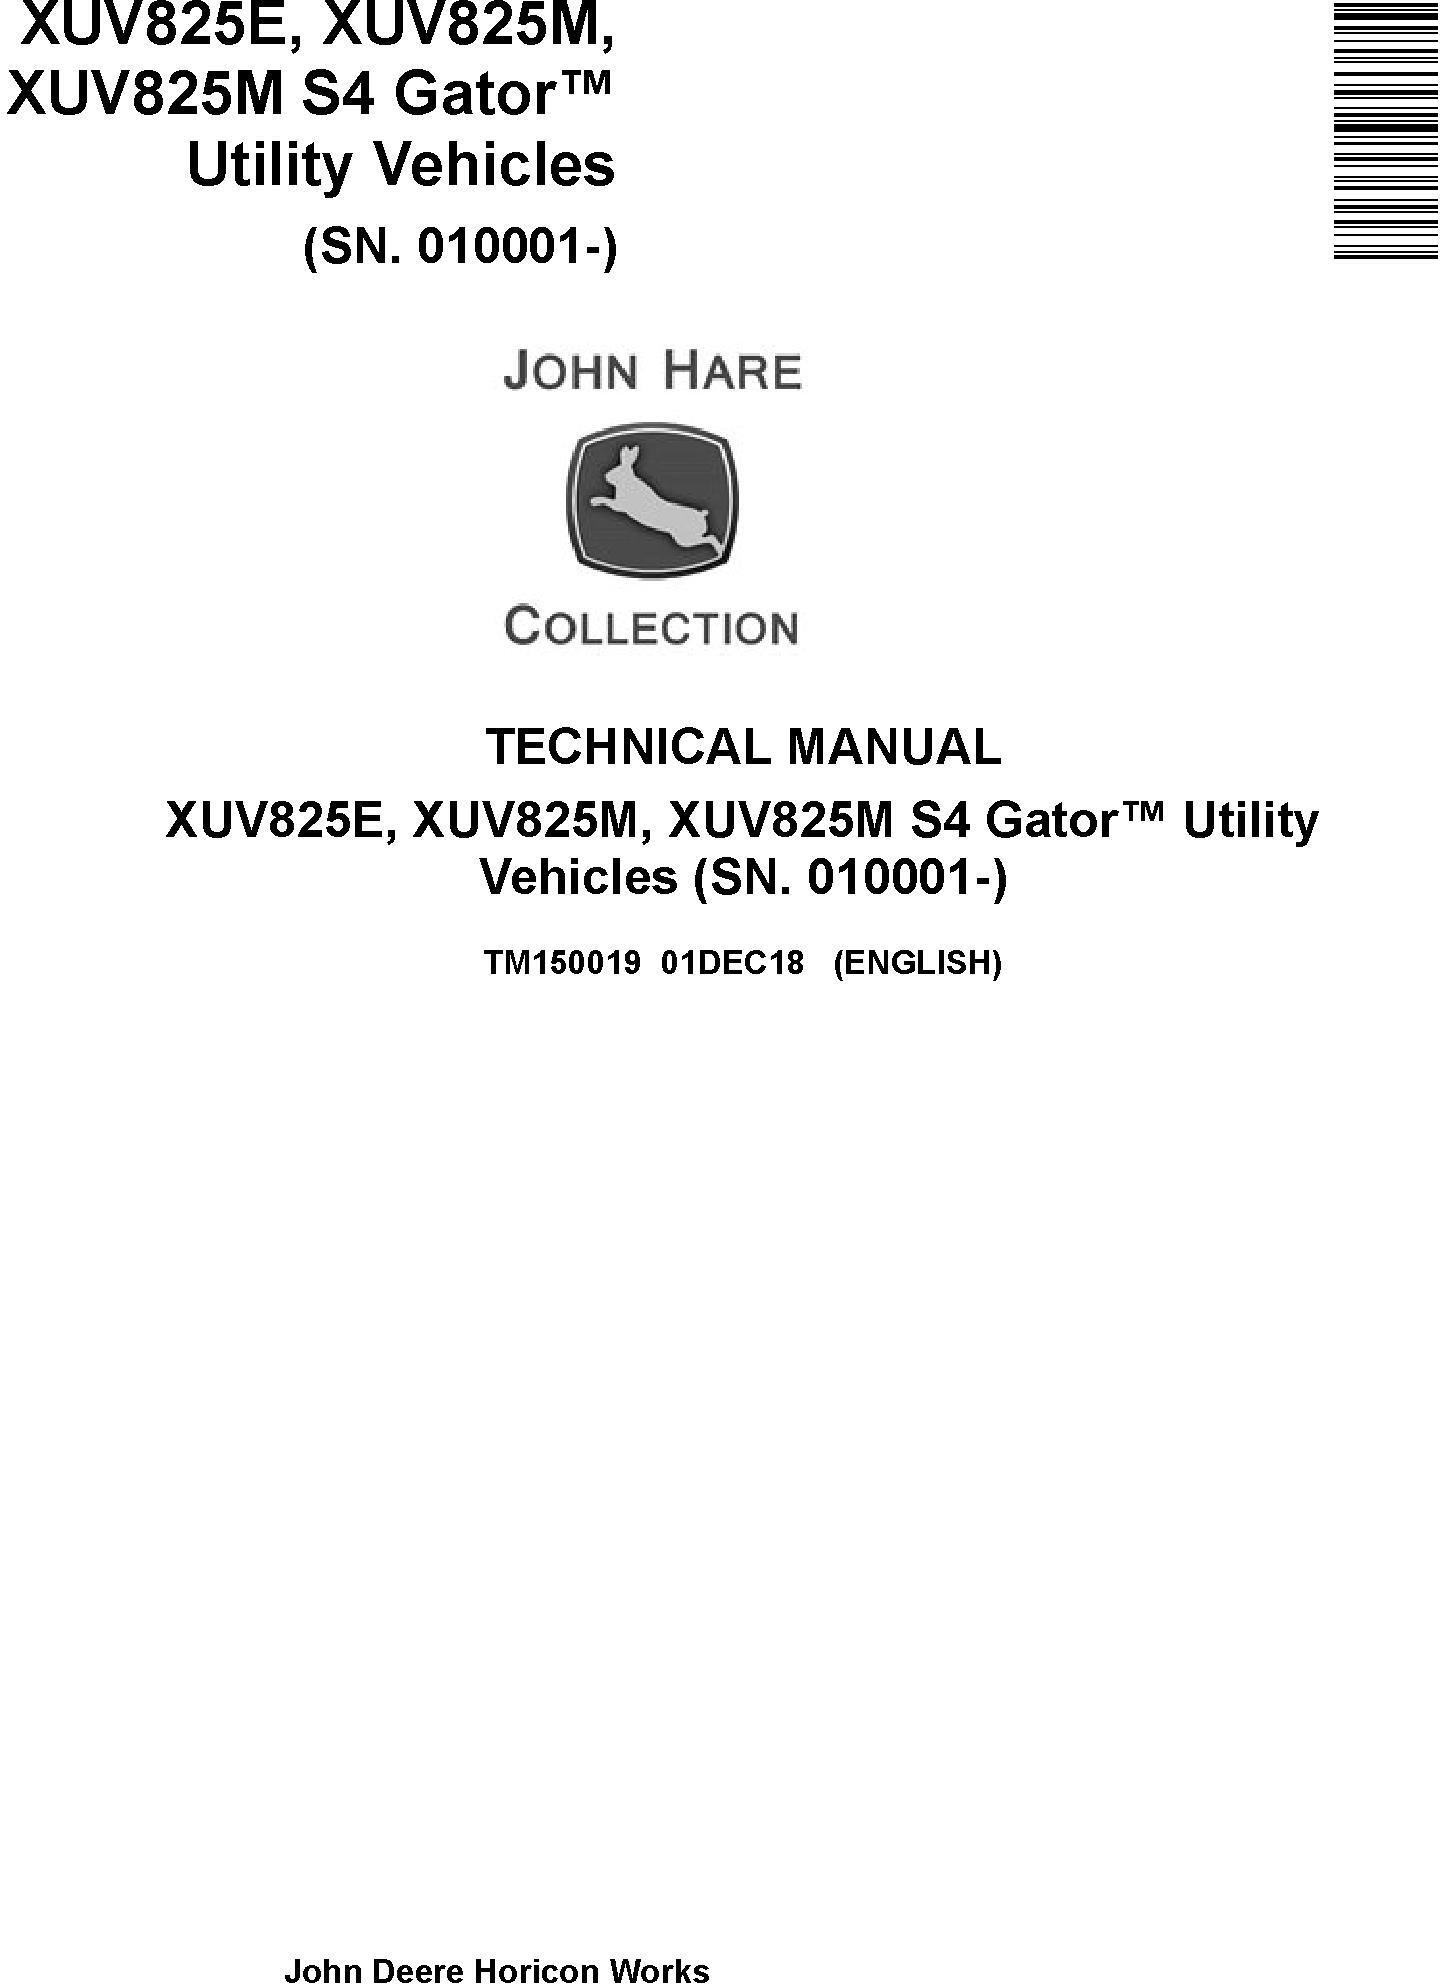 John Deere XUV825E XUV825M XUV825M S4 Gator Utility Vehicles Technical Manual TM150019